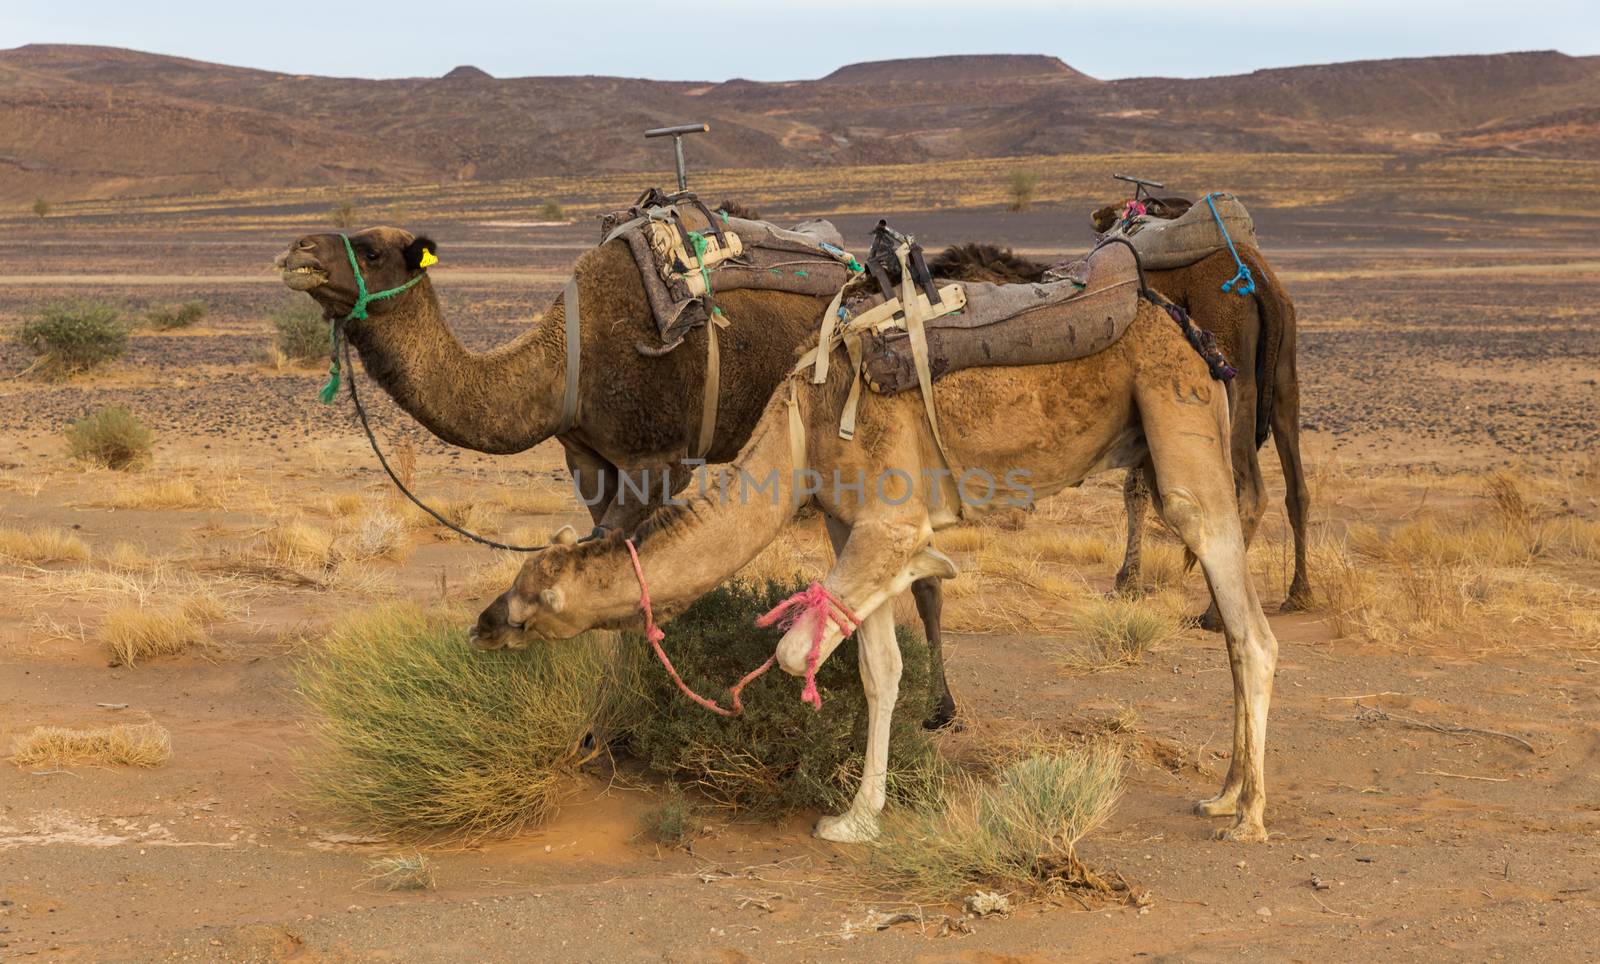 camels in the Sahara desert eat grass